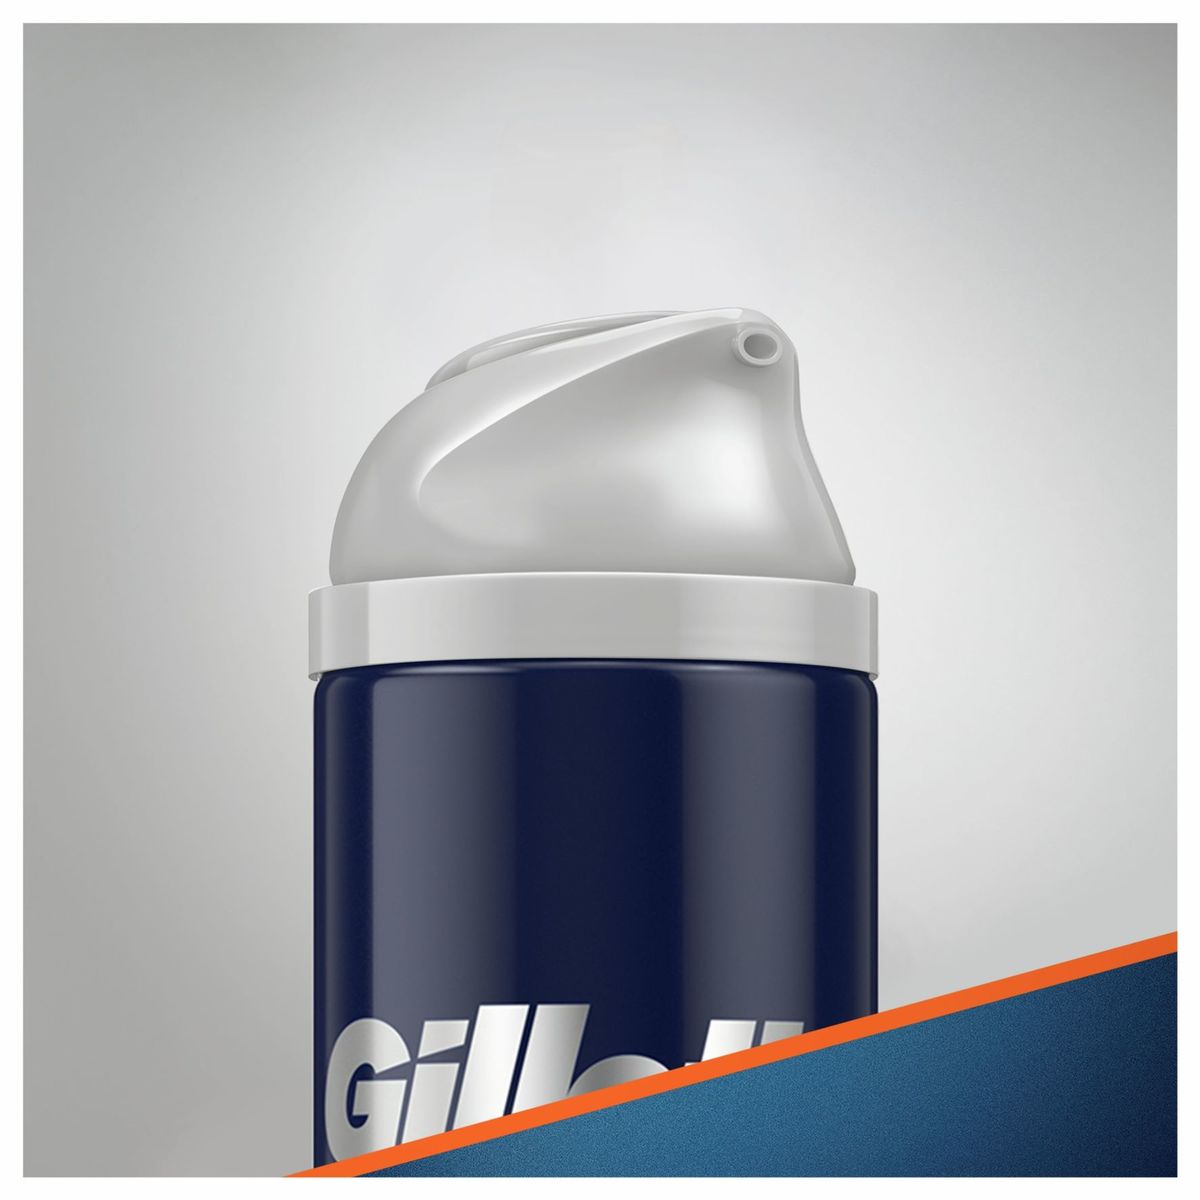 Gillette Fusion ProGlide Sensitive Active Sport Scheerschuim 250 ml